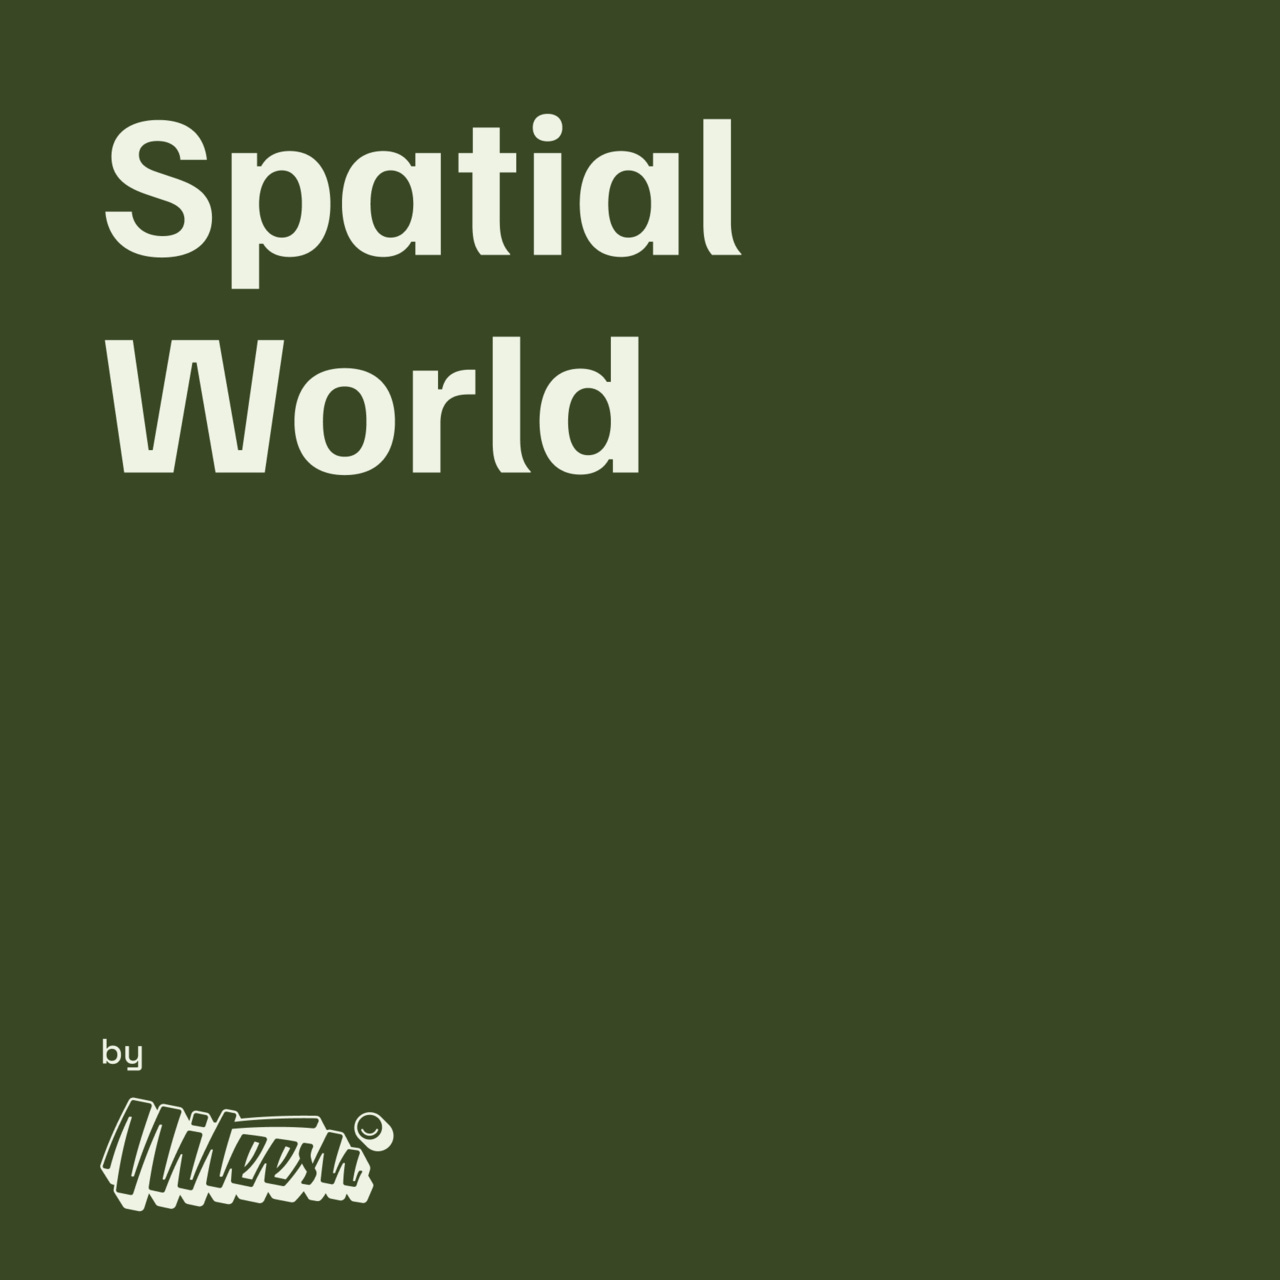 Spatial World by Niteesh